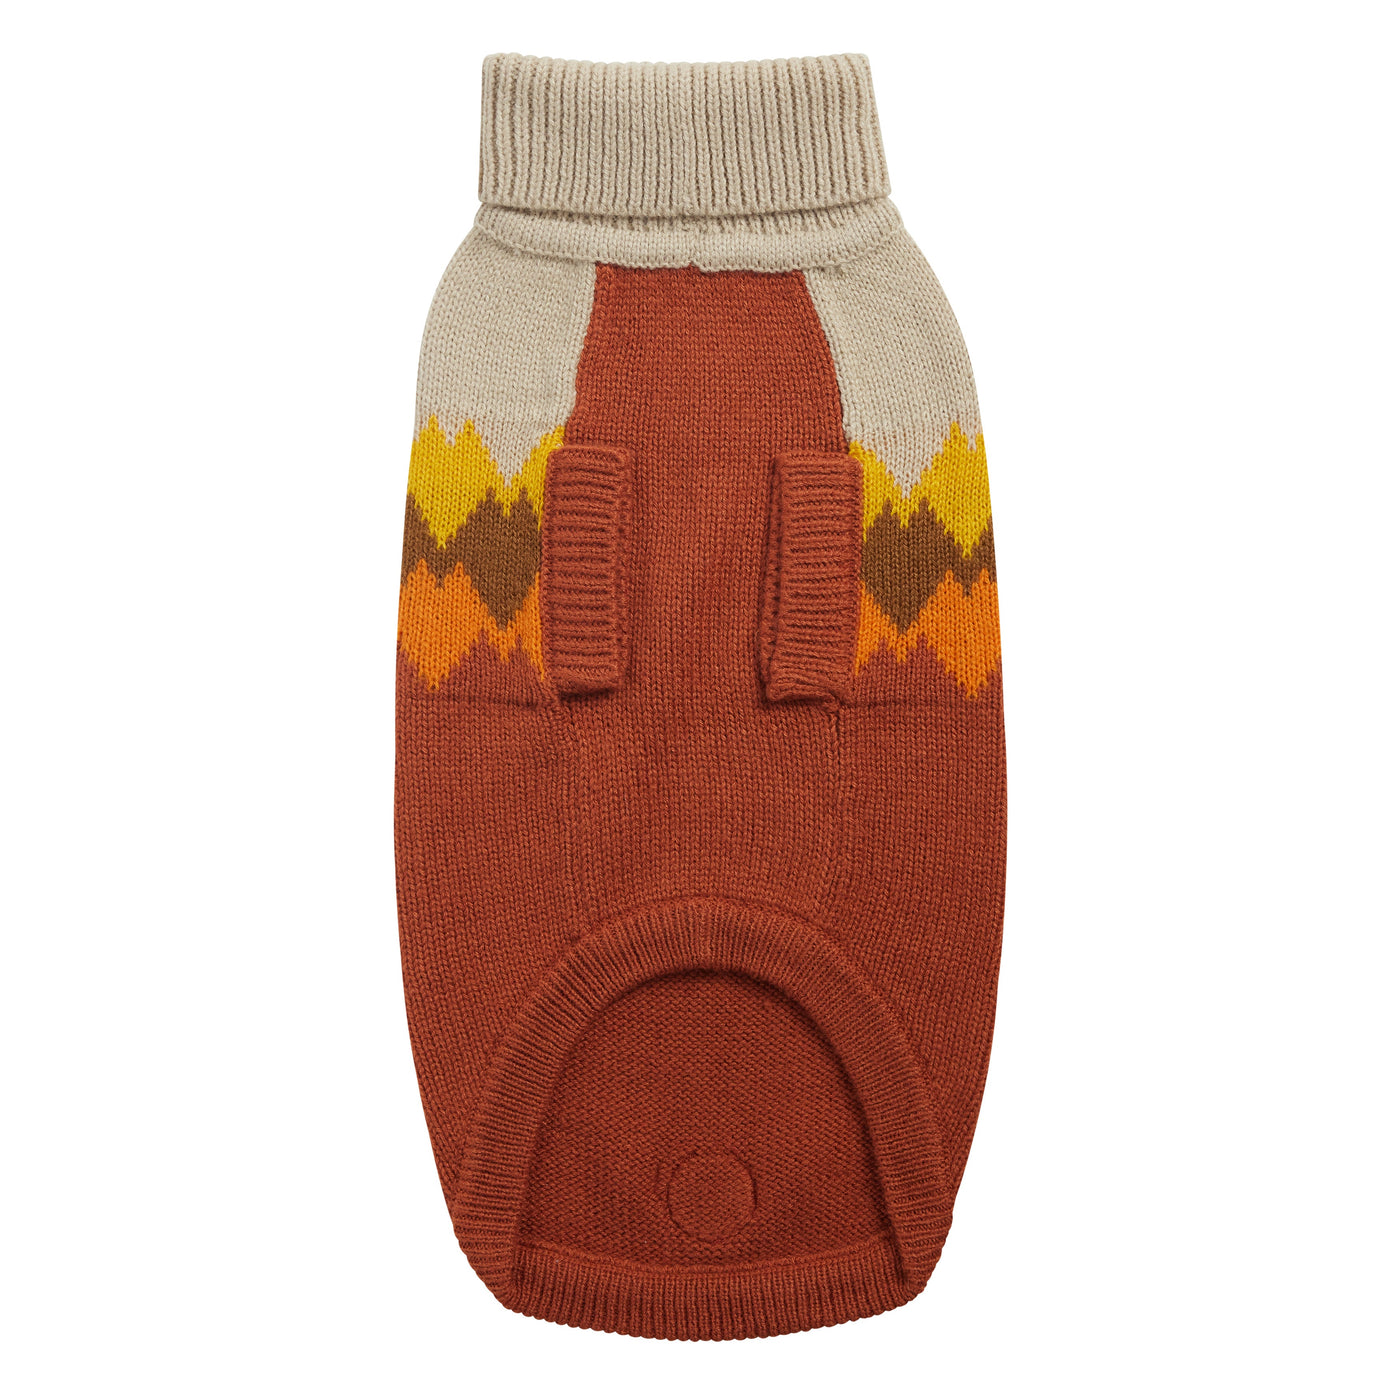 Fireside Sweater - Chili